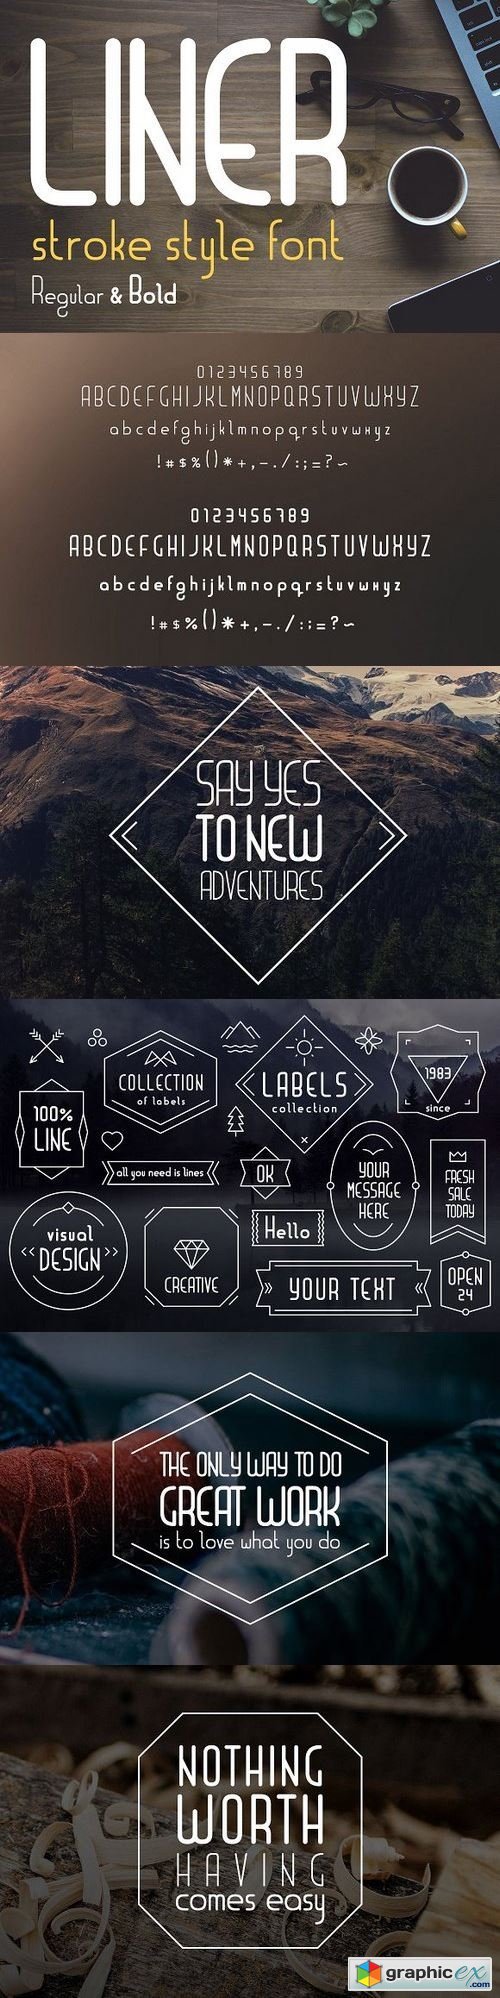 Liner| font for logos with frames